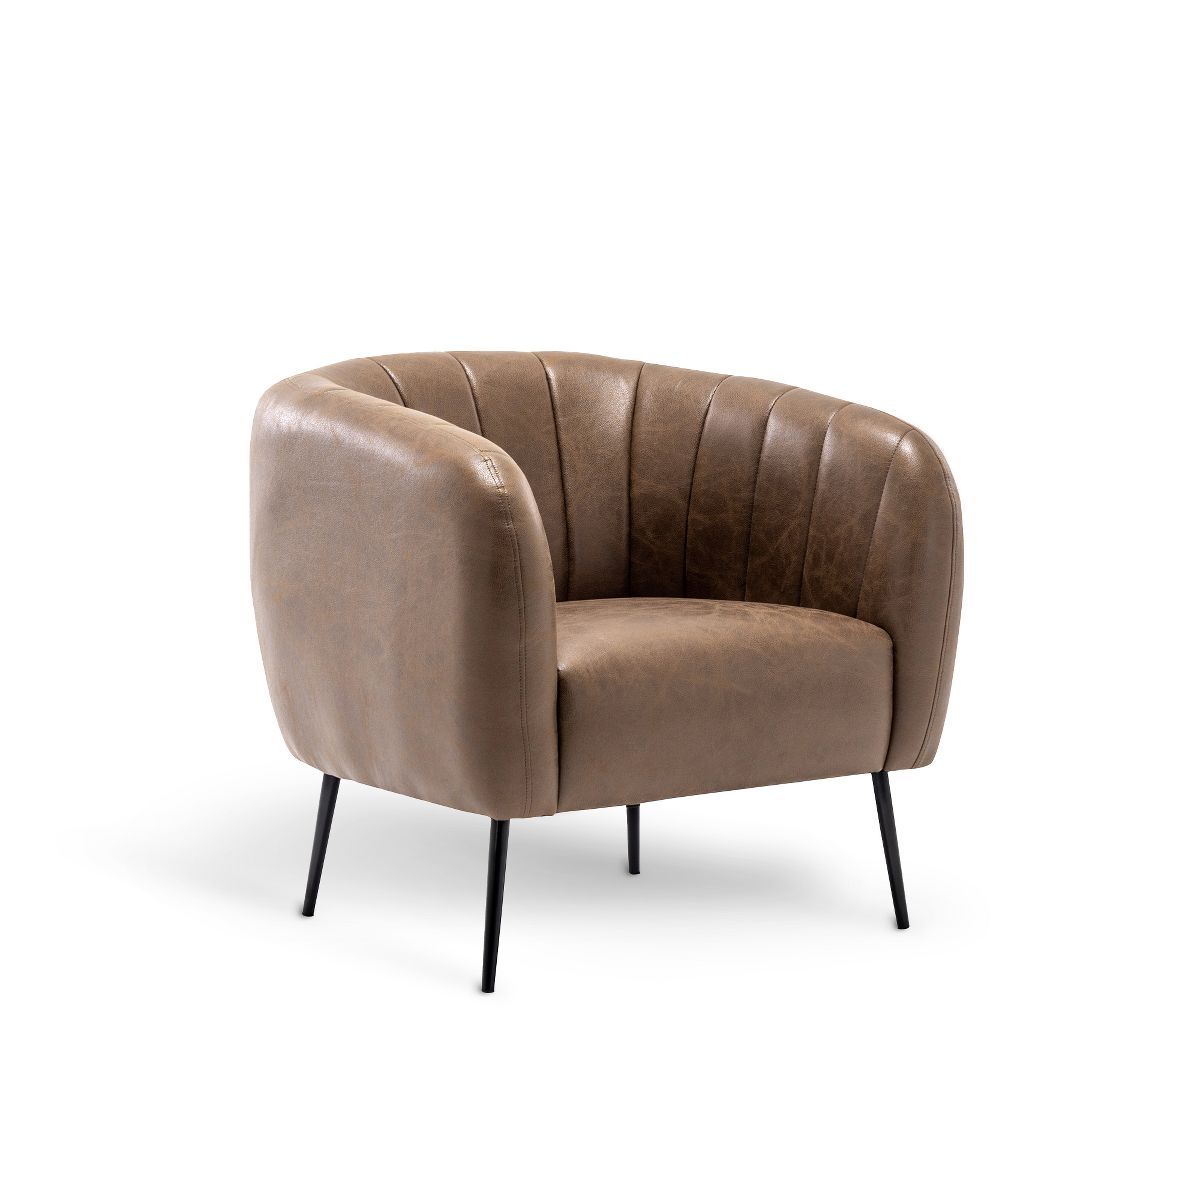 eLuxury Sawyer Channel Living Room Chair | Target